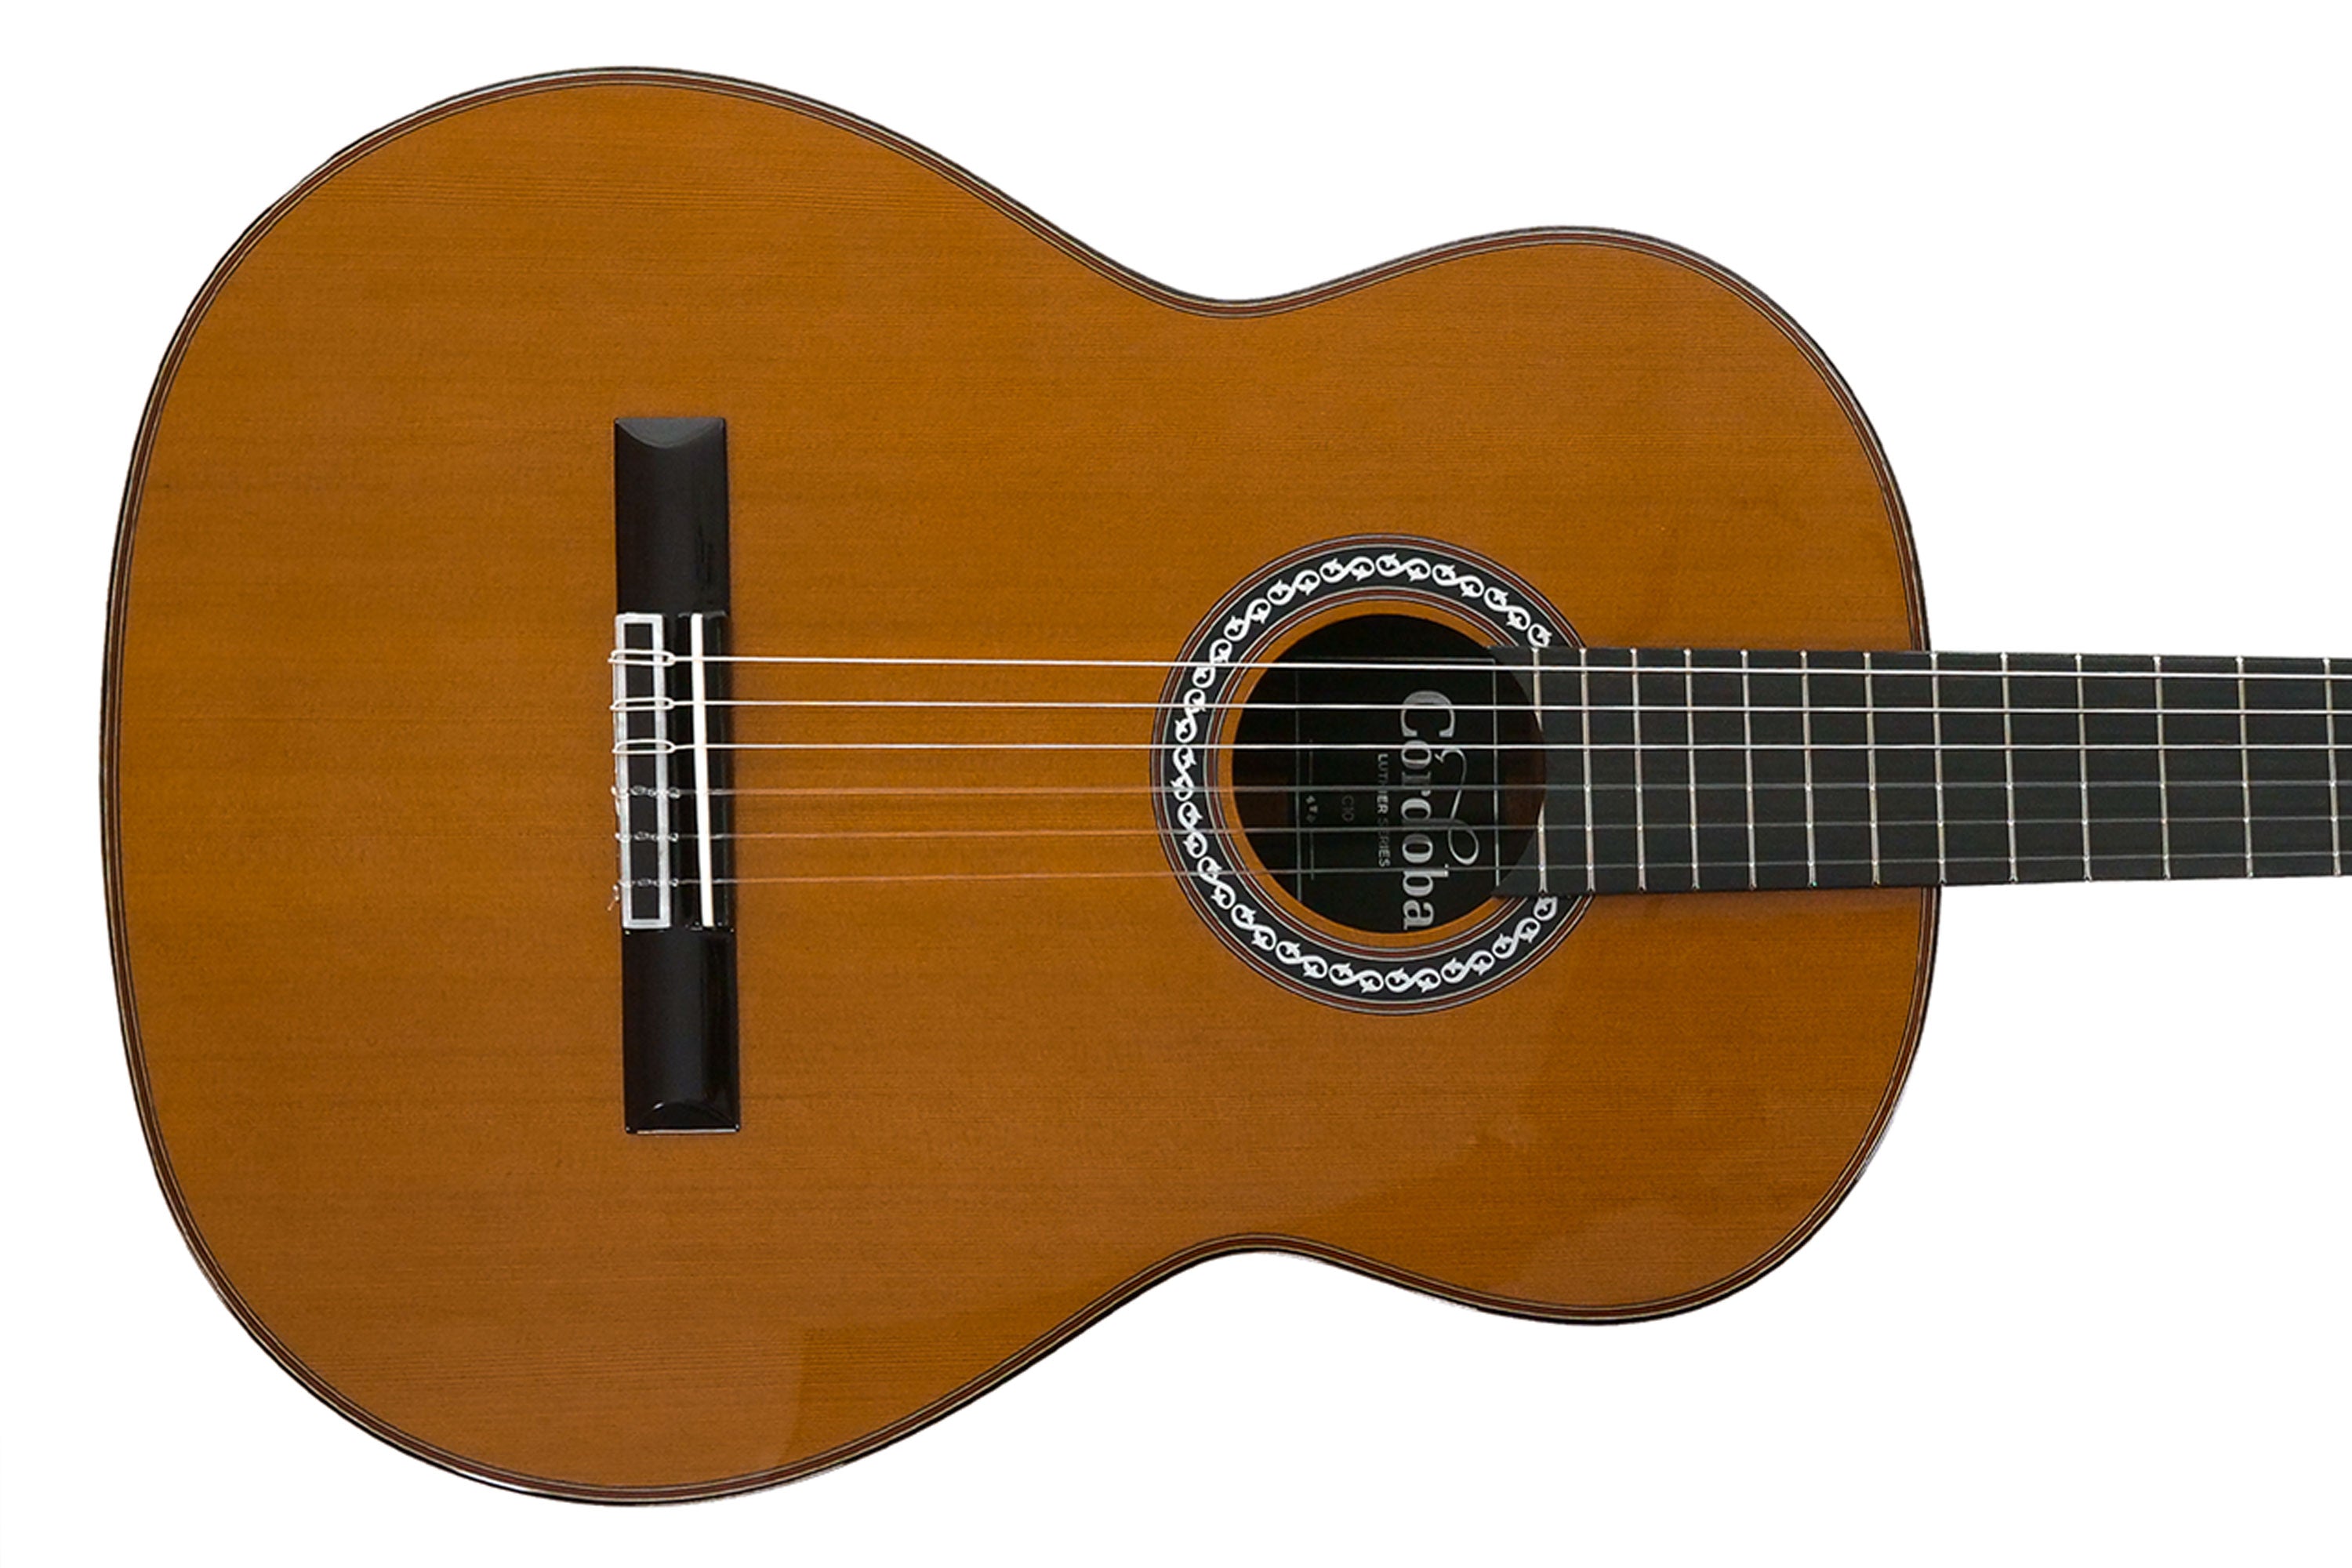 Cordoba C10 CD Classical Nylon Guitar "Mariano"